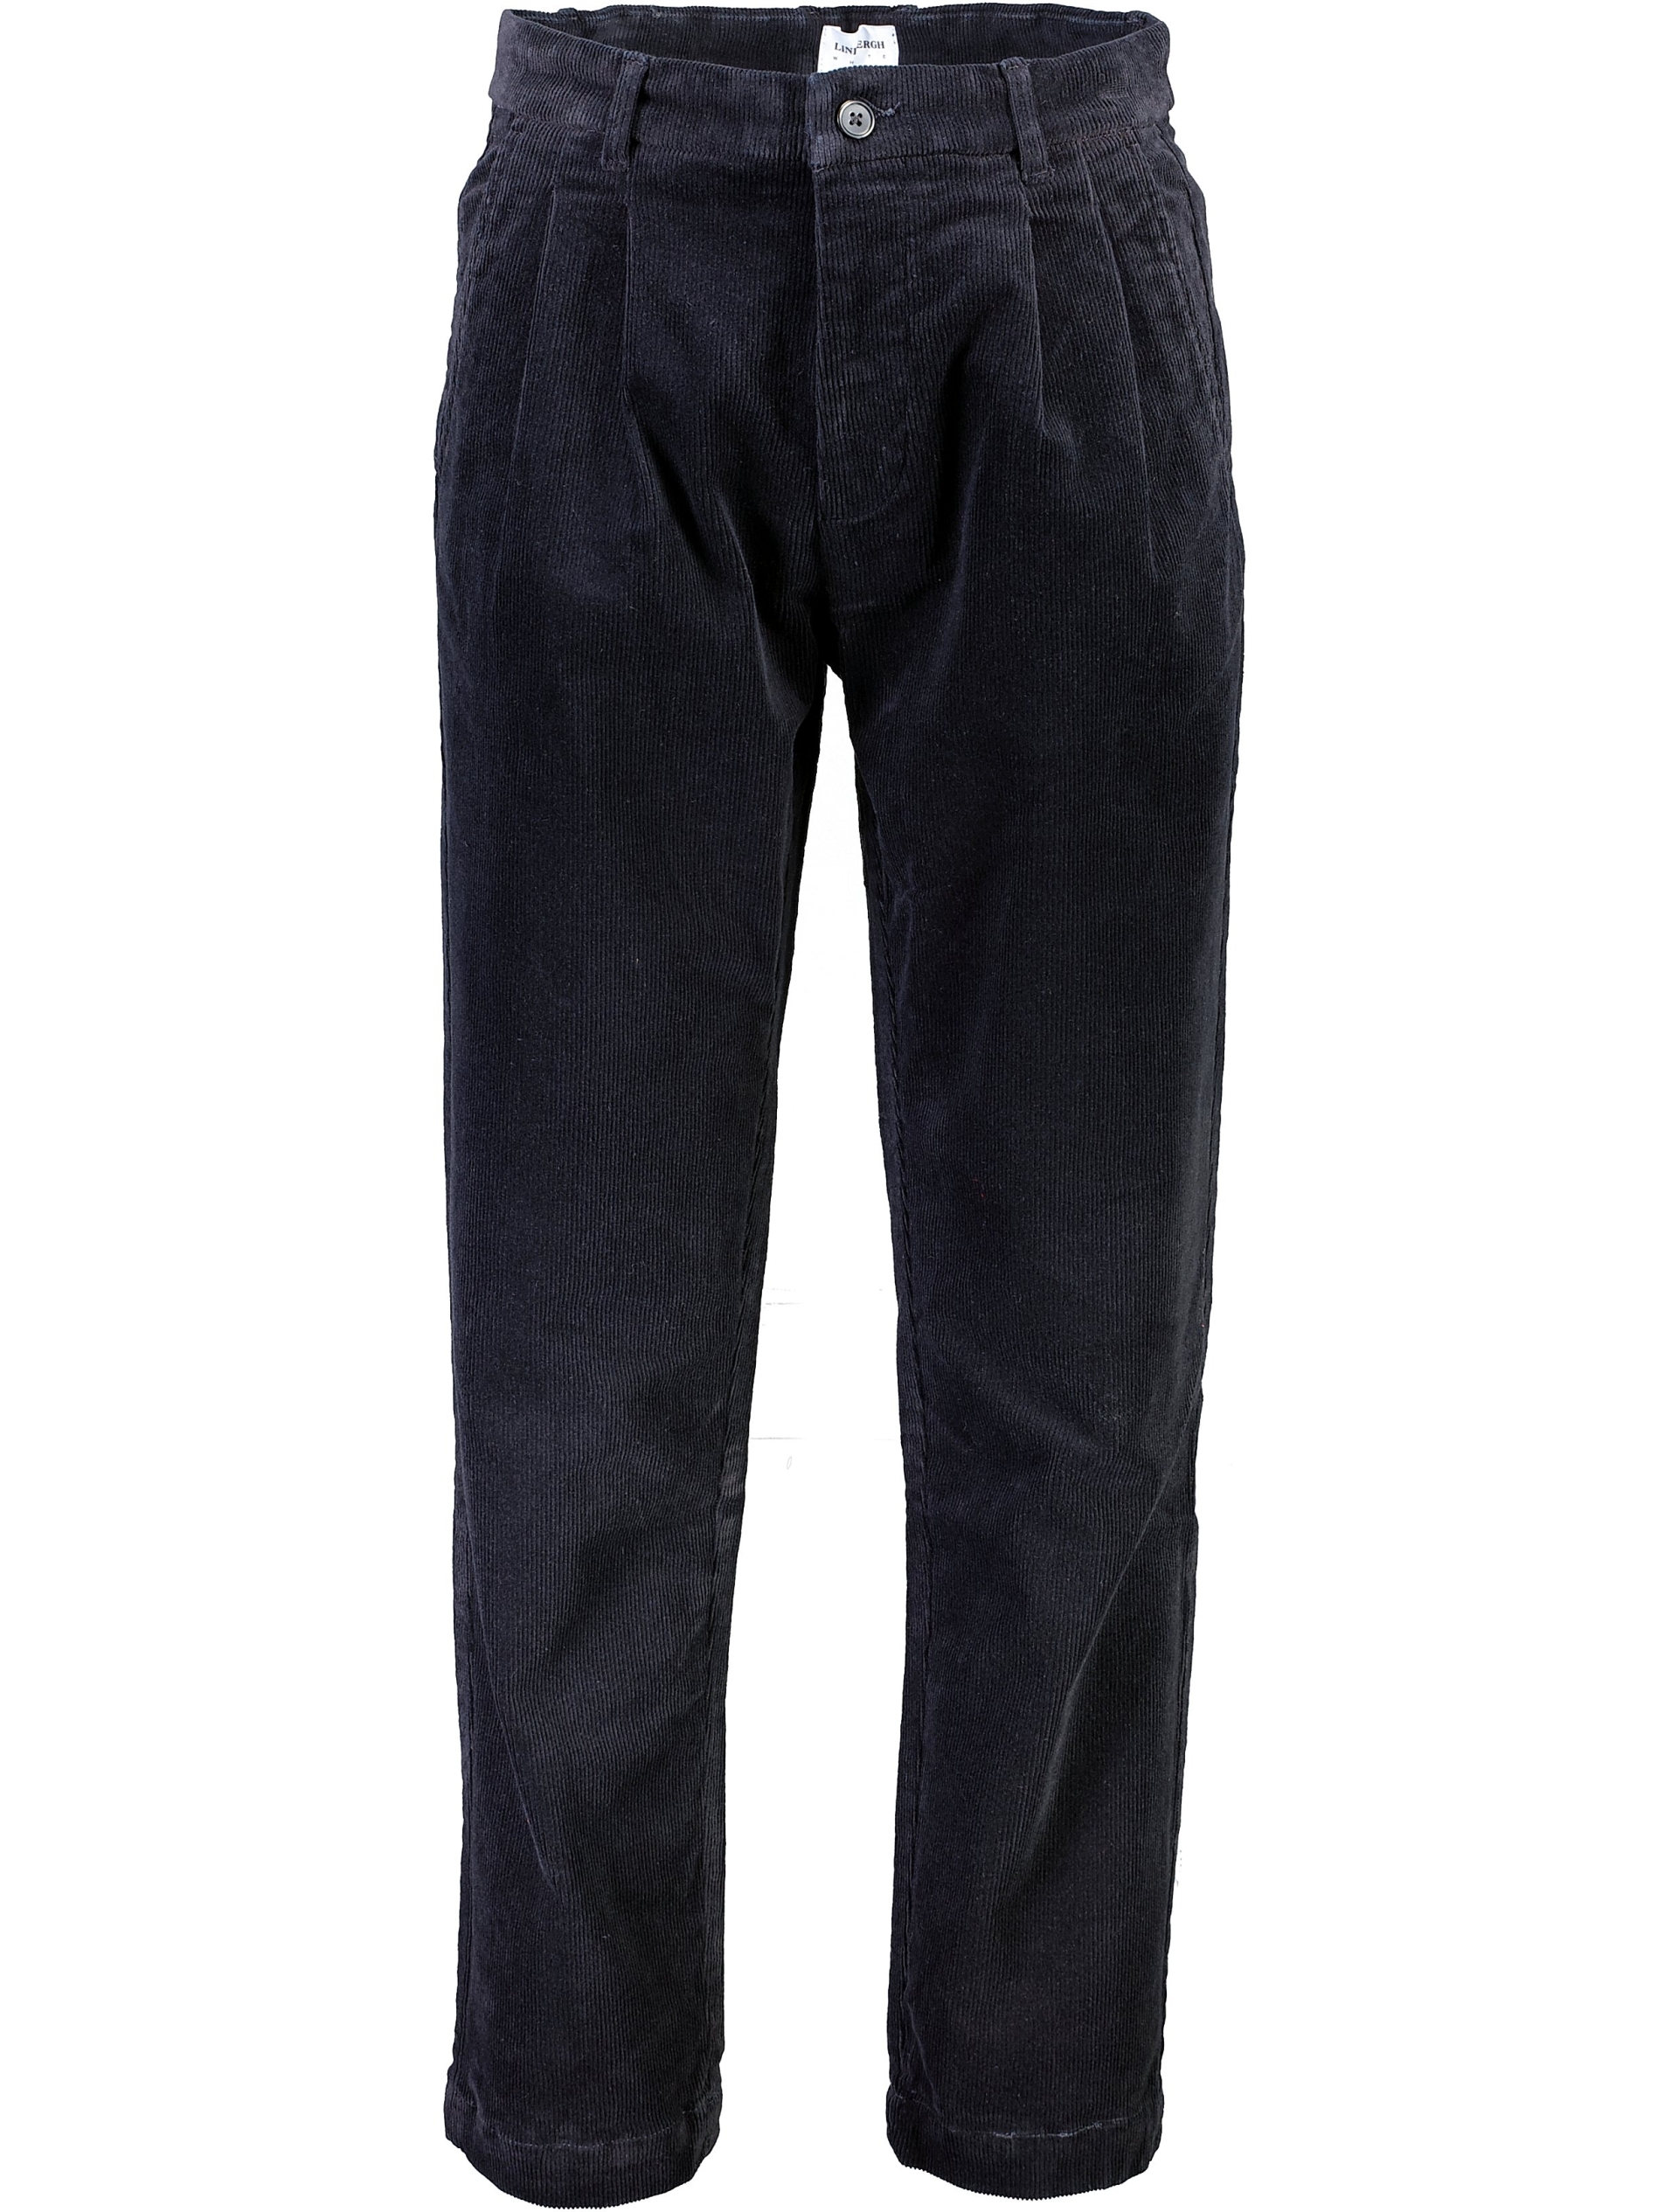 Lindbergh Corduroy trousers blue / navy